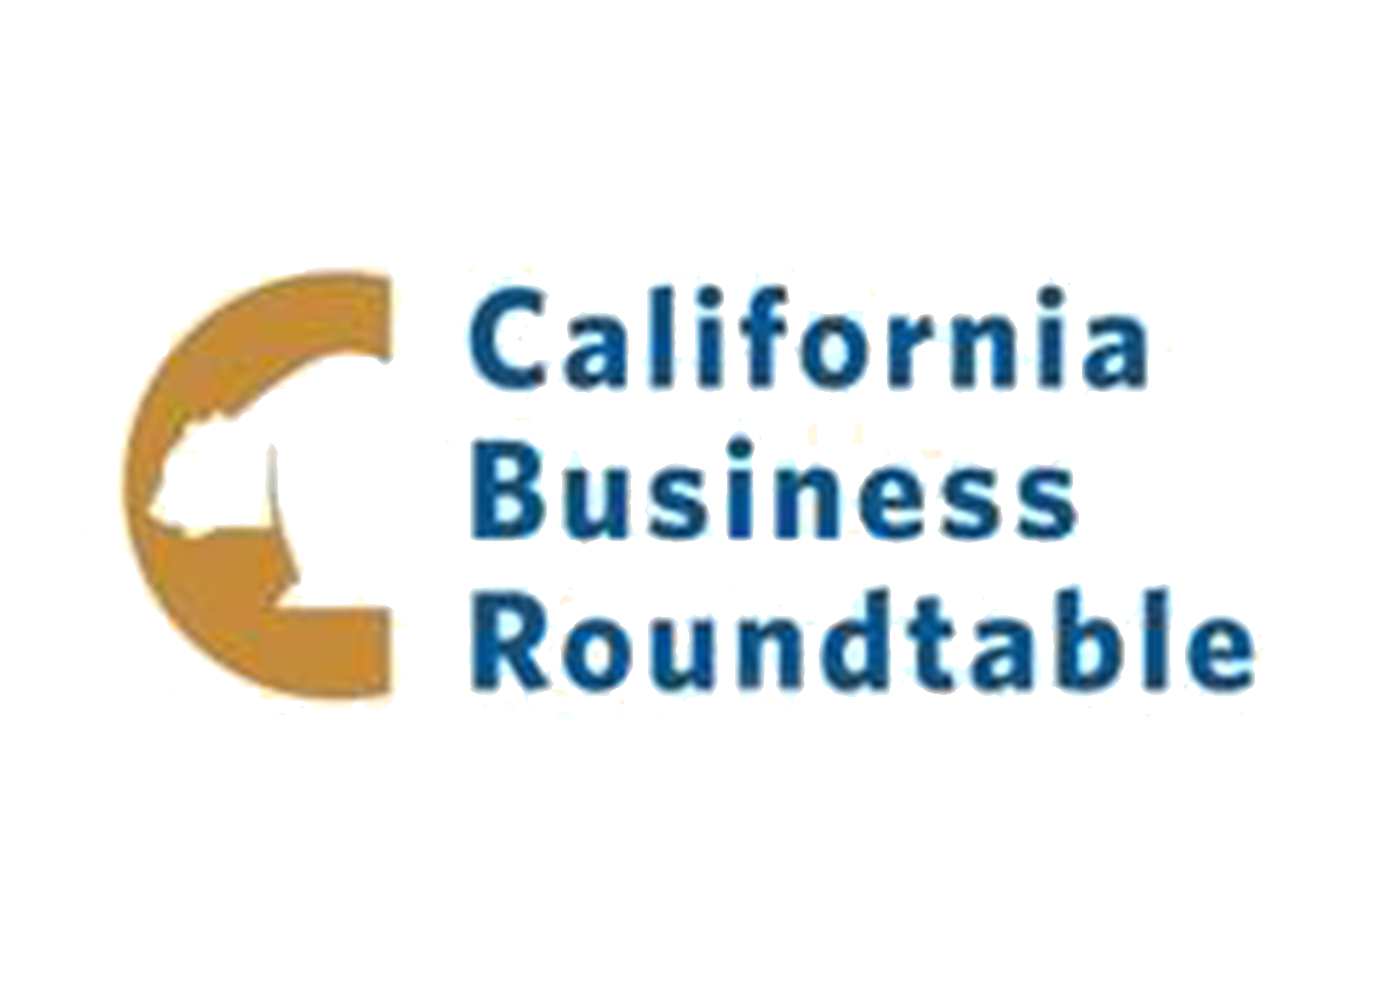 California Business Roundtable logo